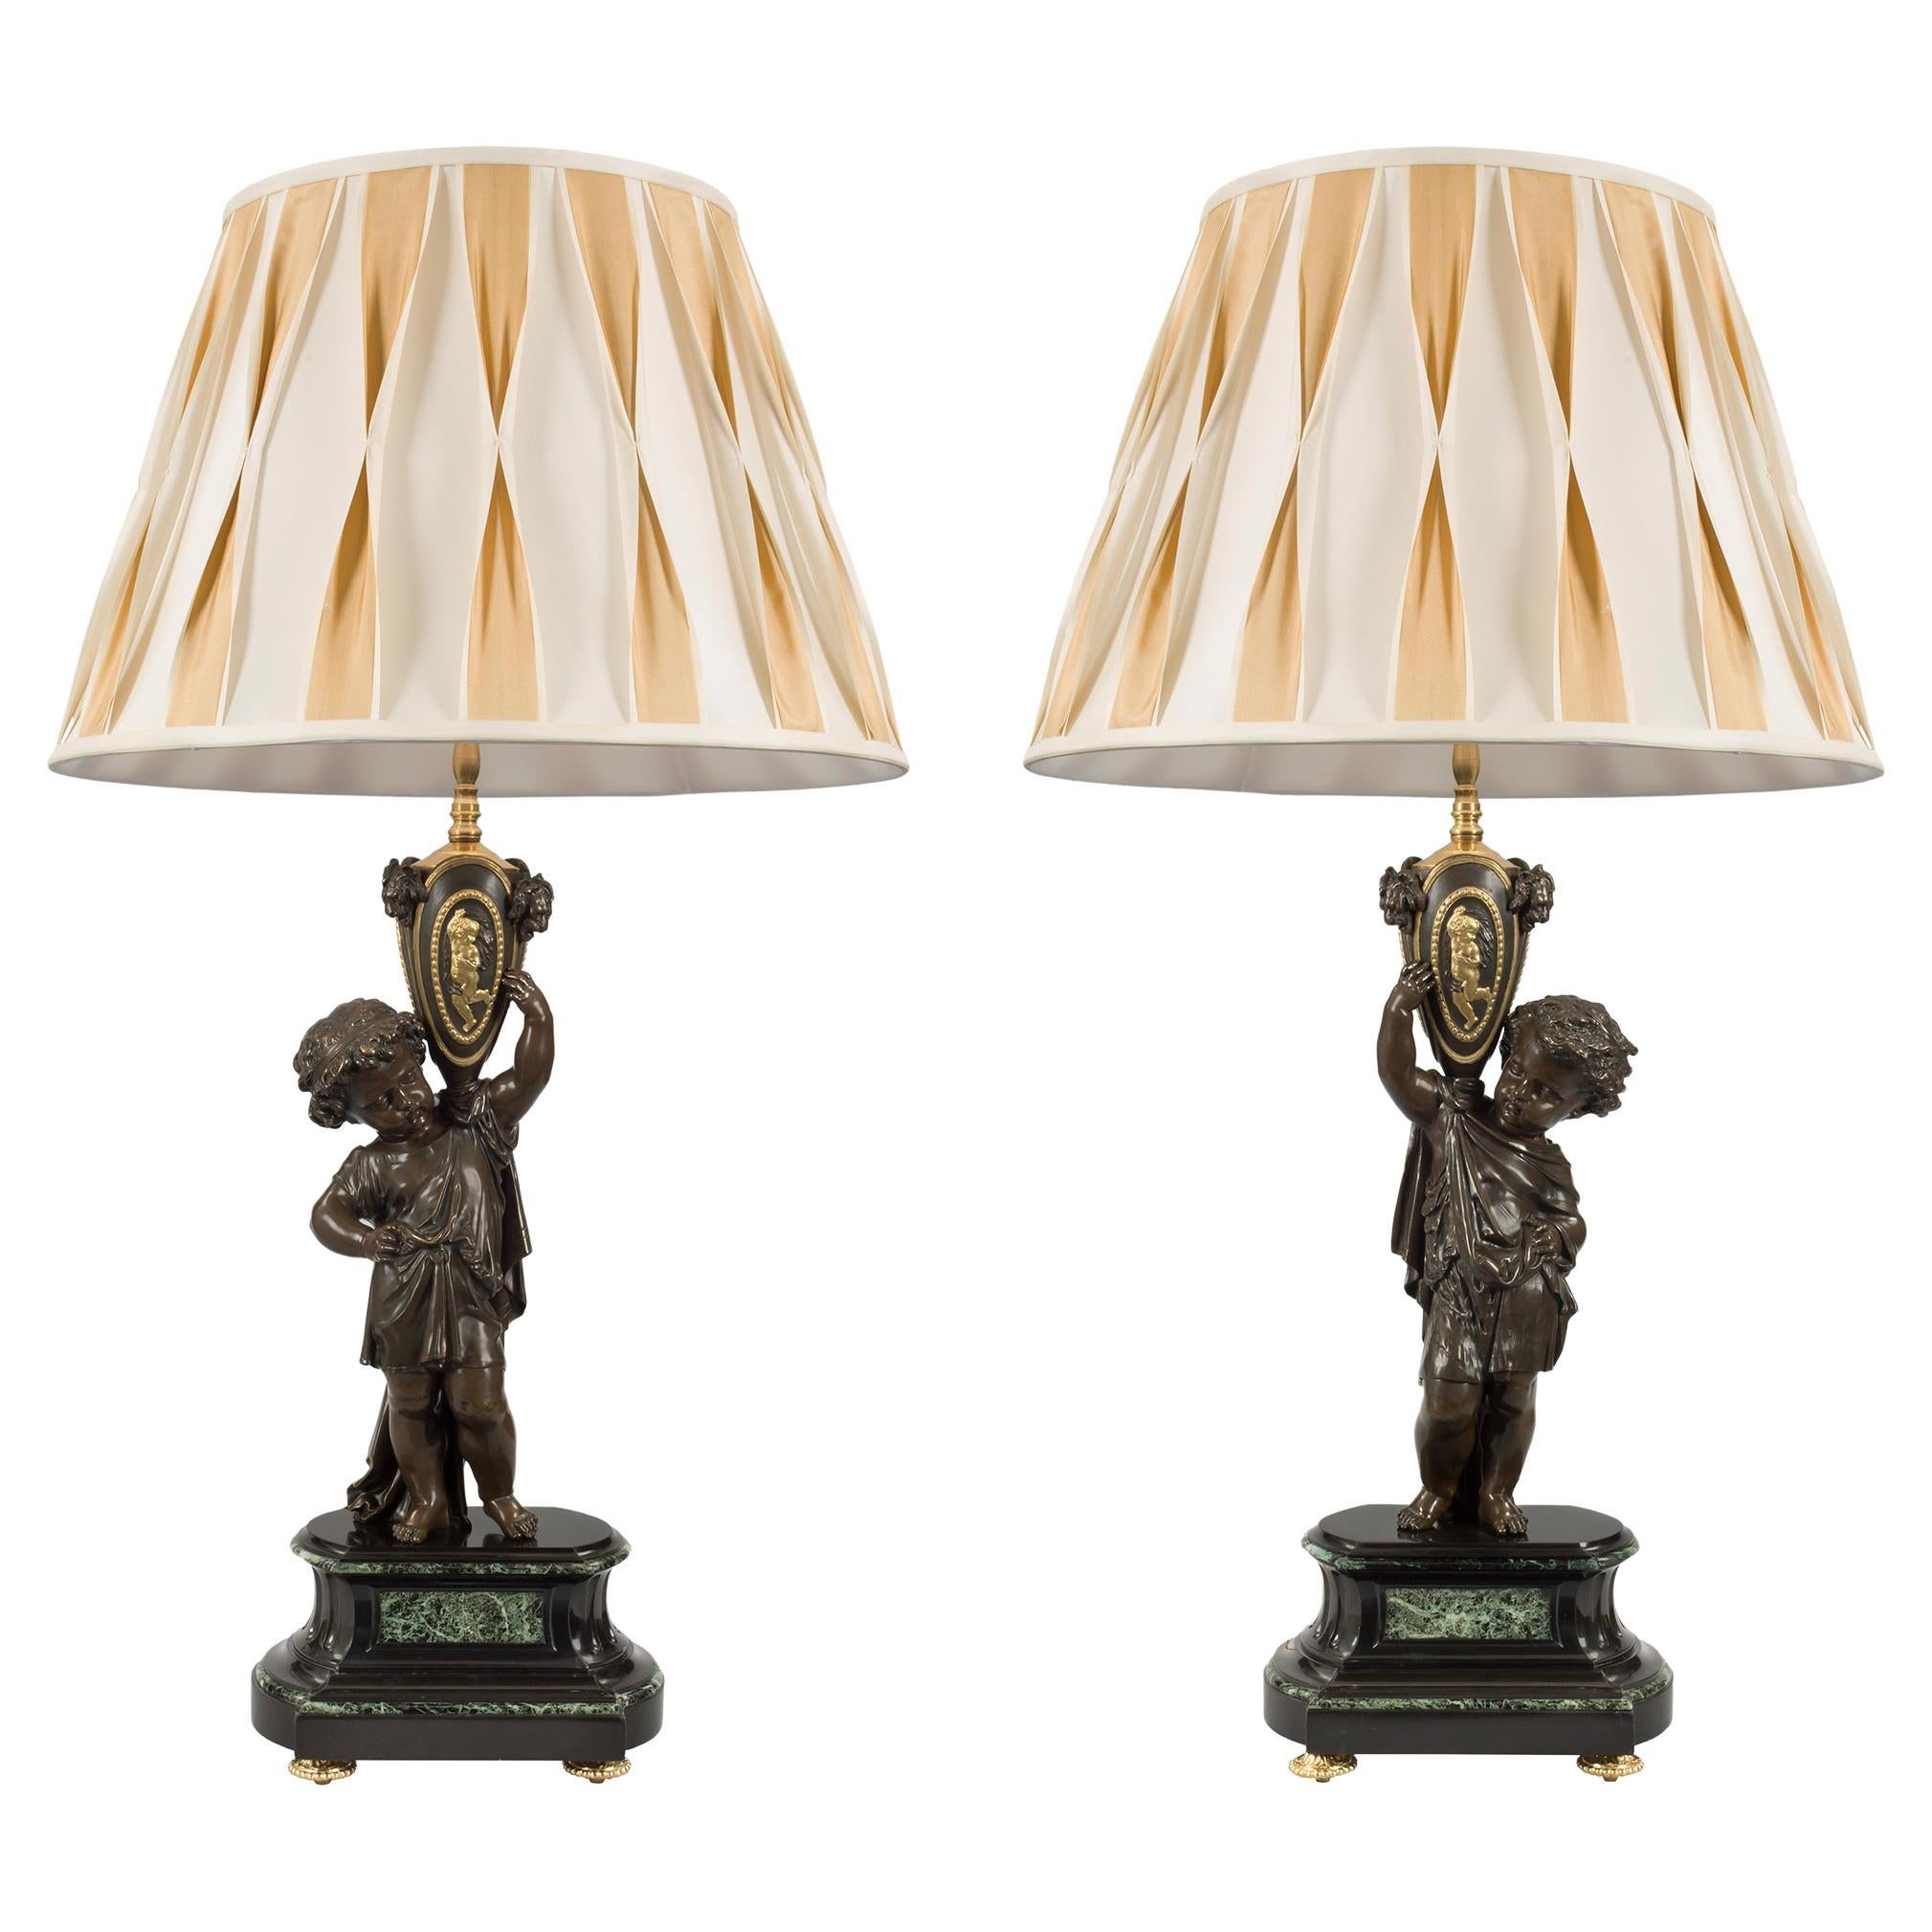 Pair of French 19th Century Louis XVI St. Belle Époque Period Lamps For Sale